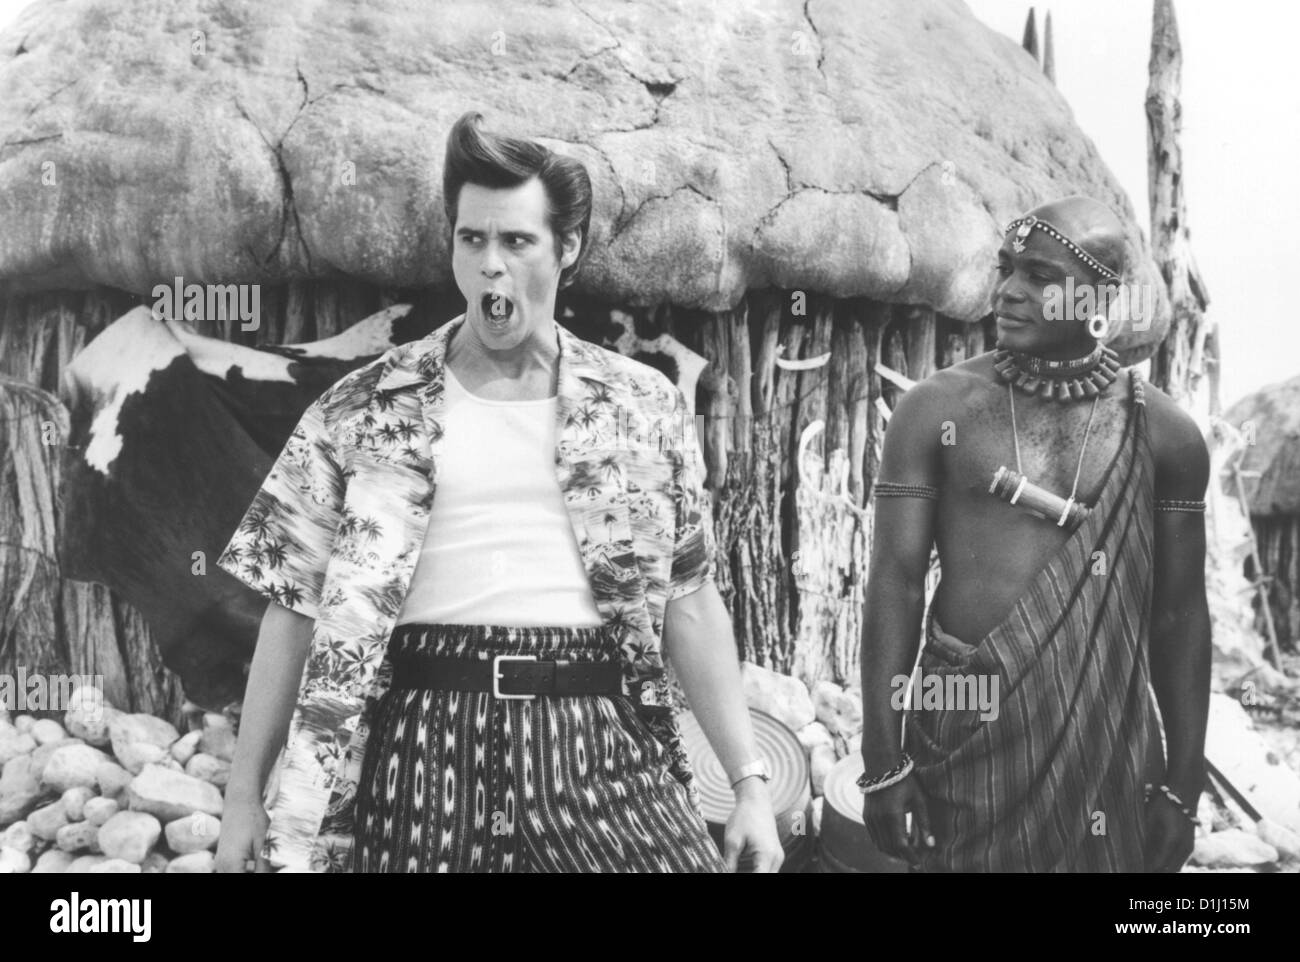 Ace Ventura - Jetzt Wird's Wild   Ace Ventura: When Nature Calls   Szenenbild  -- Stock Photo